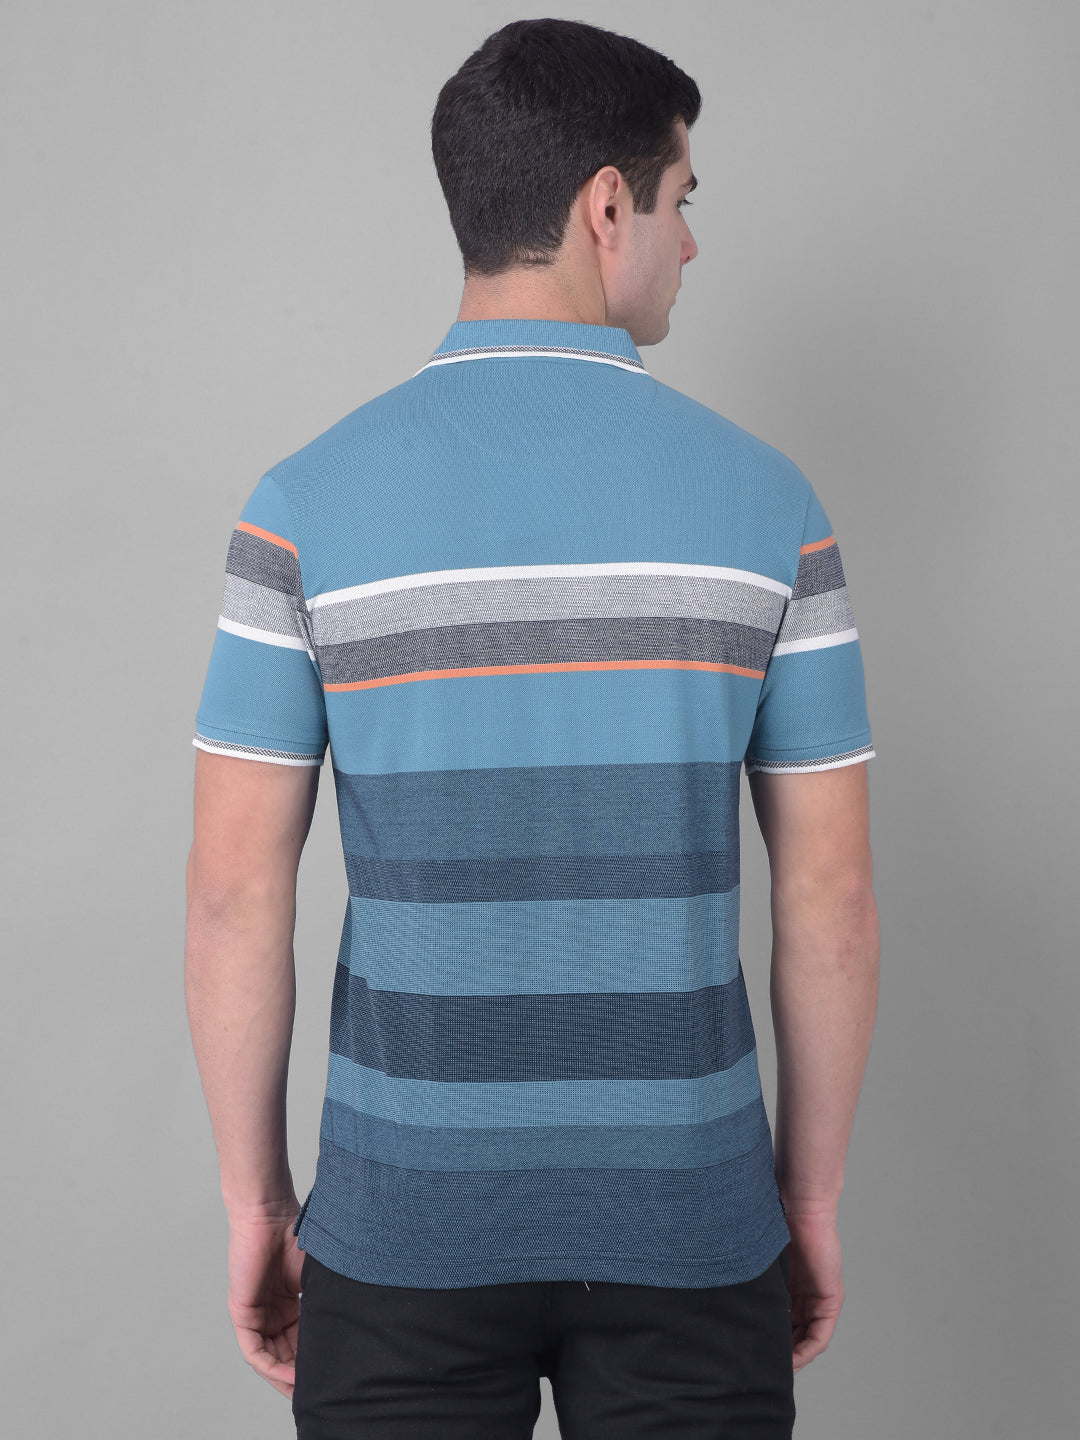 cobb teal blue striped polo neck t-shirt